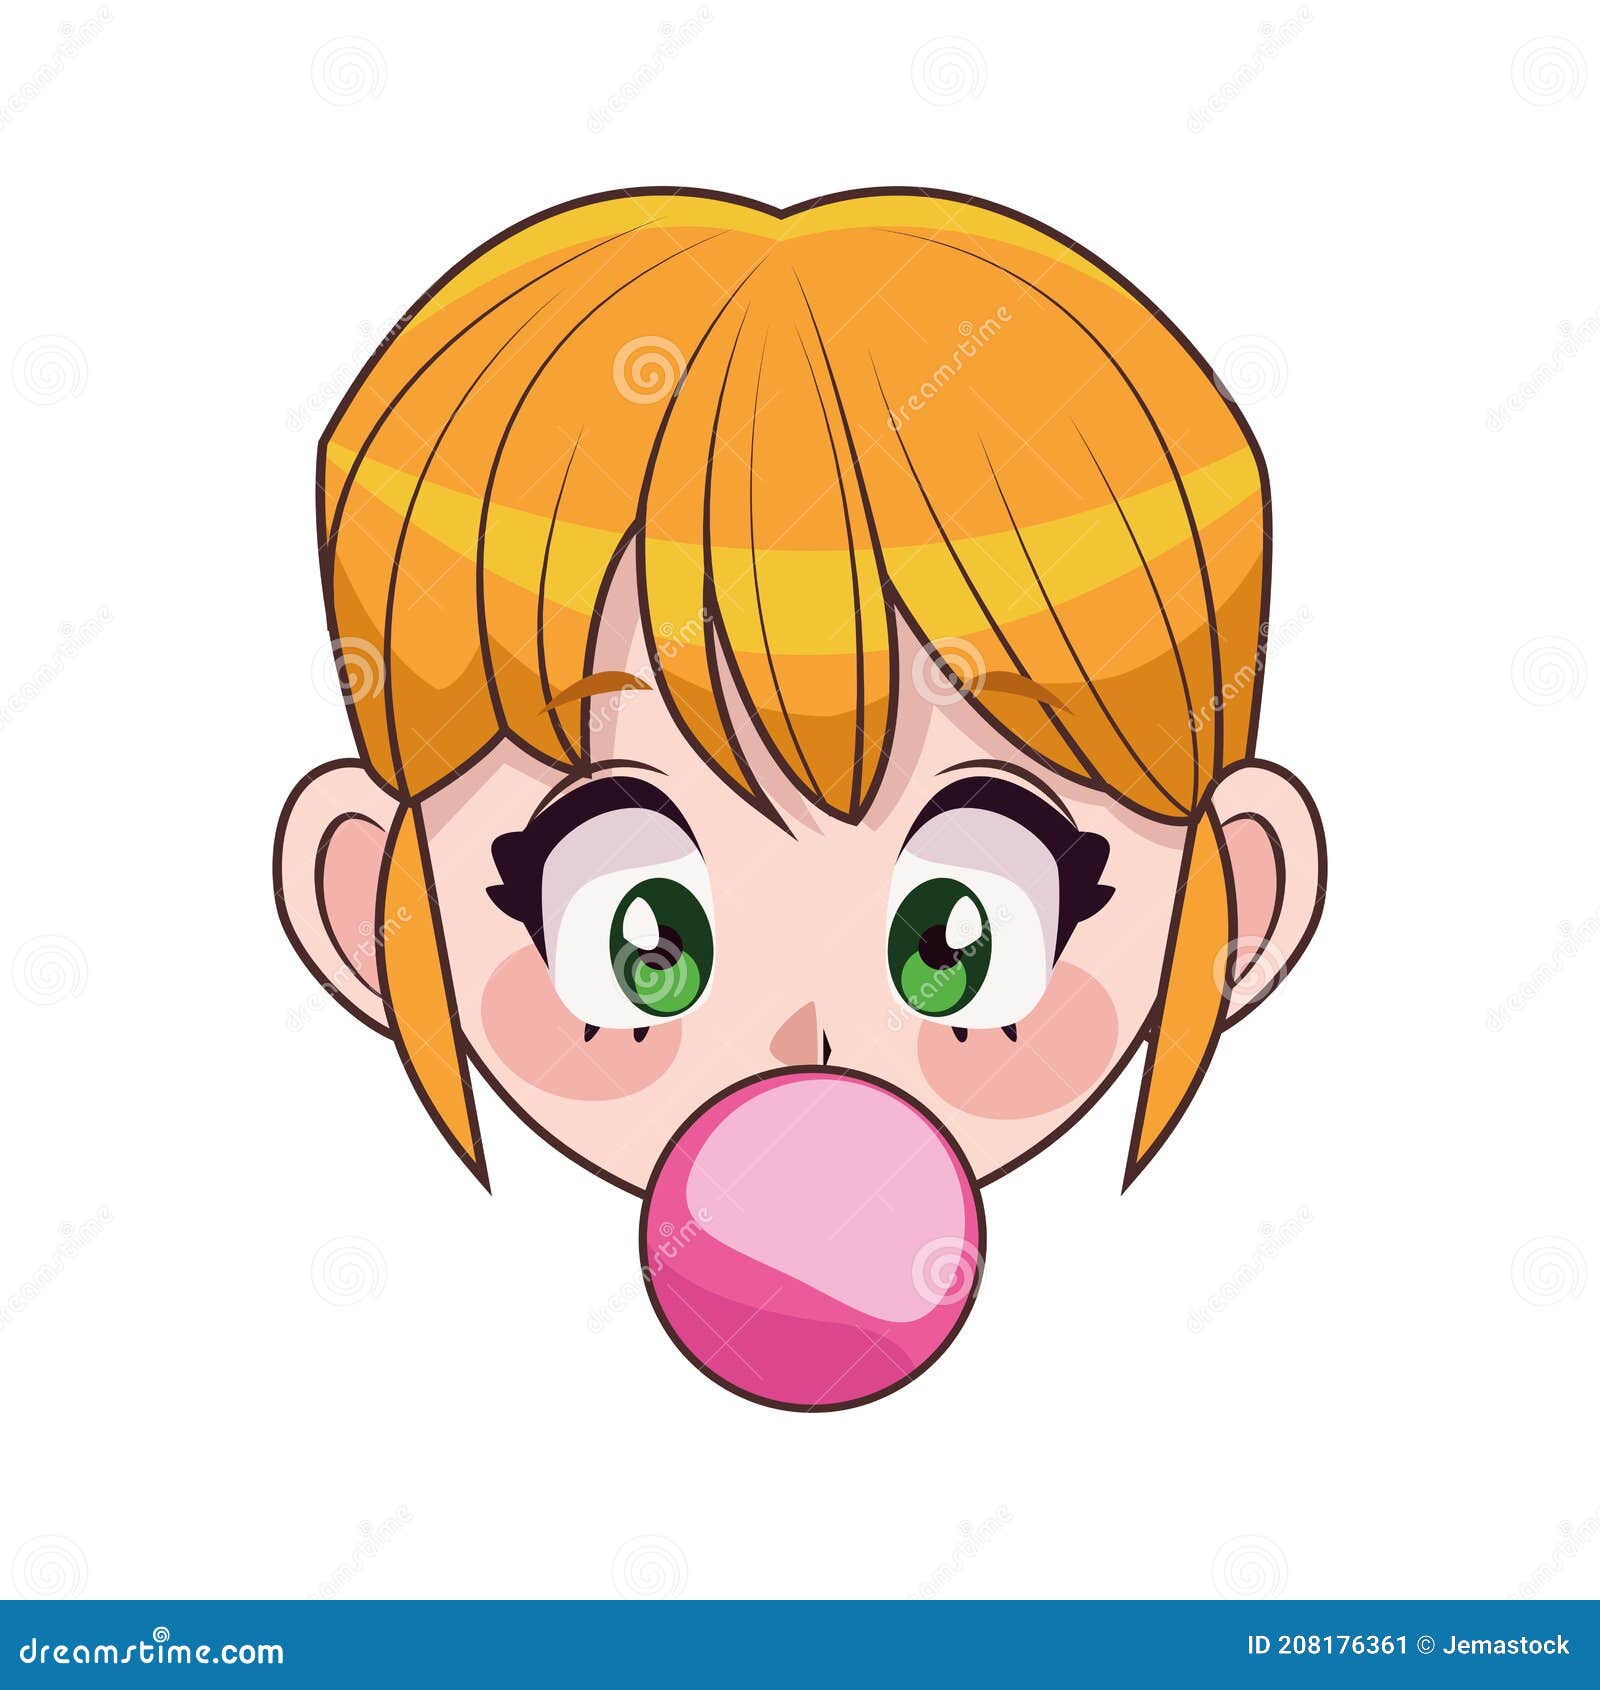 Chewing a bubble gum [Minami-ke] : r/anime